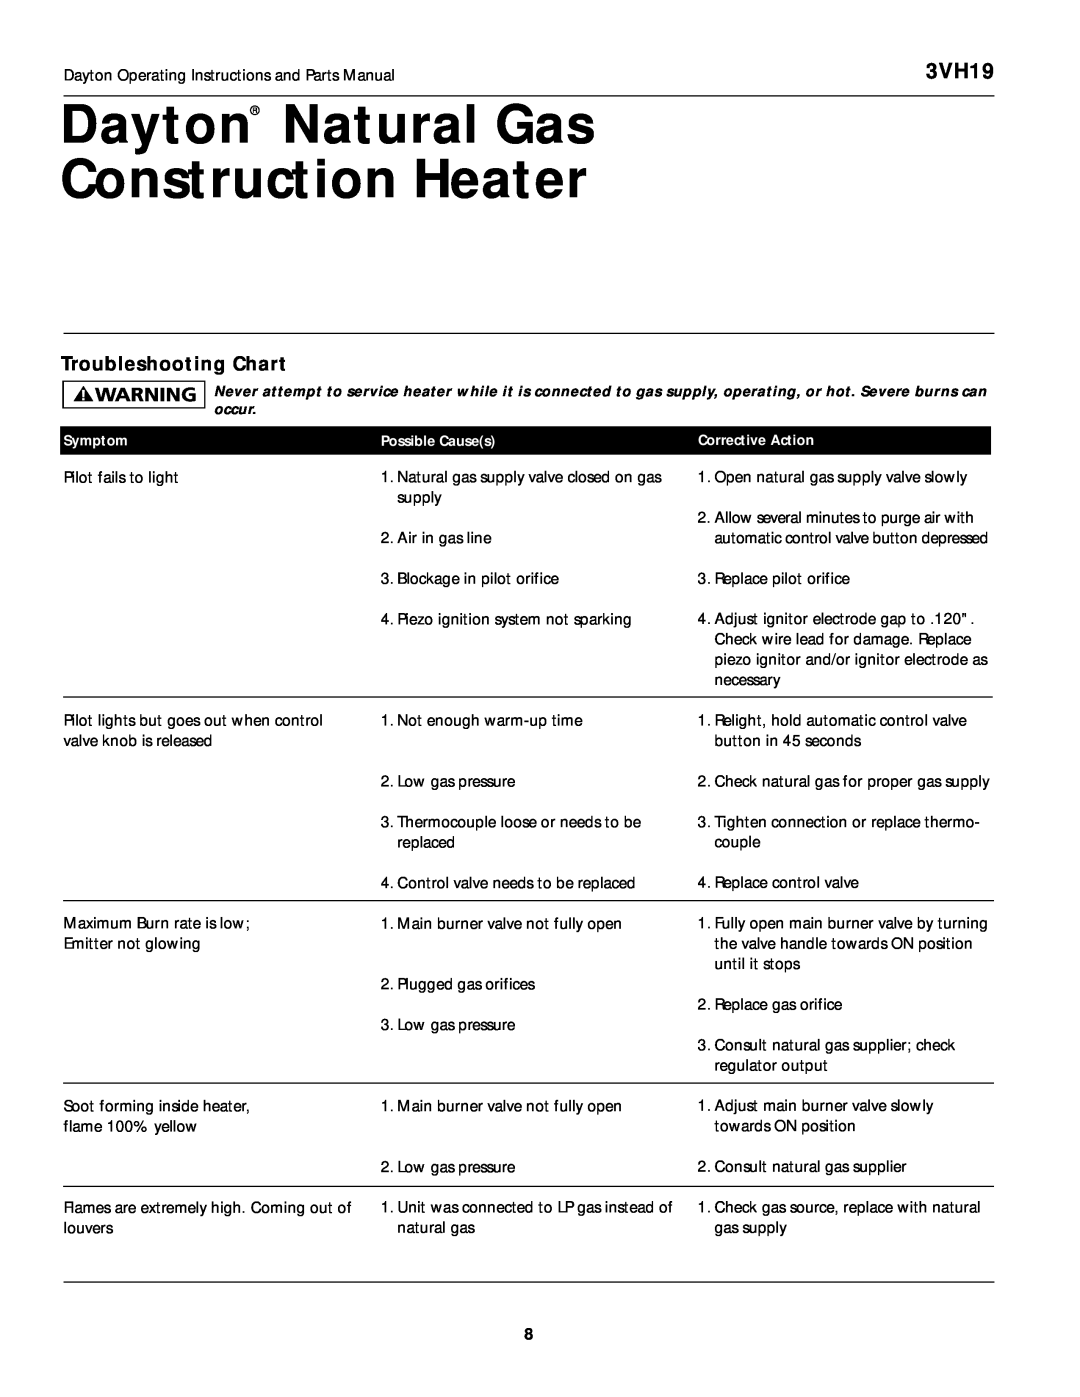 Dayton 3VH19 manual Dayton Natural Gas Construction Heater, Troubleshooting Chart 